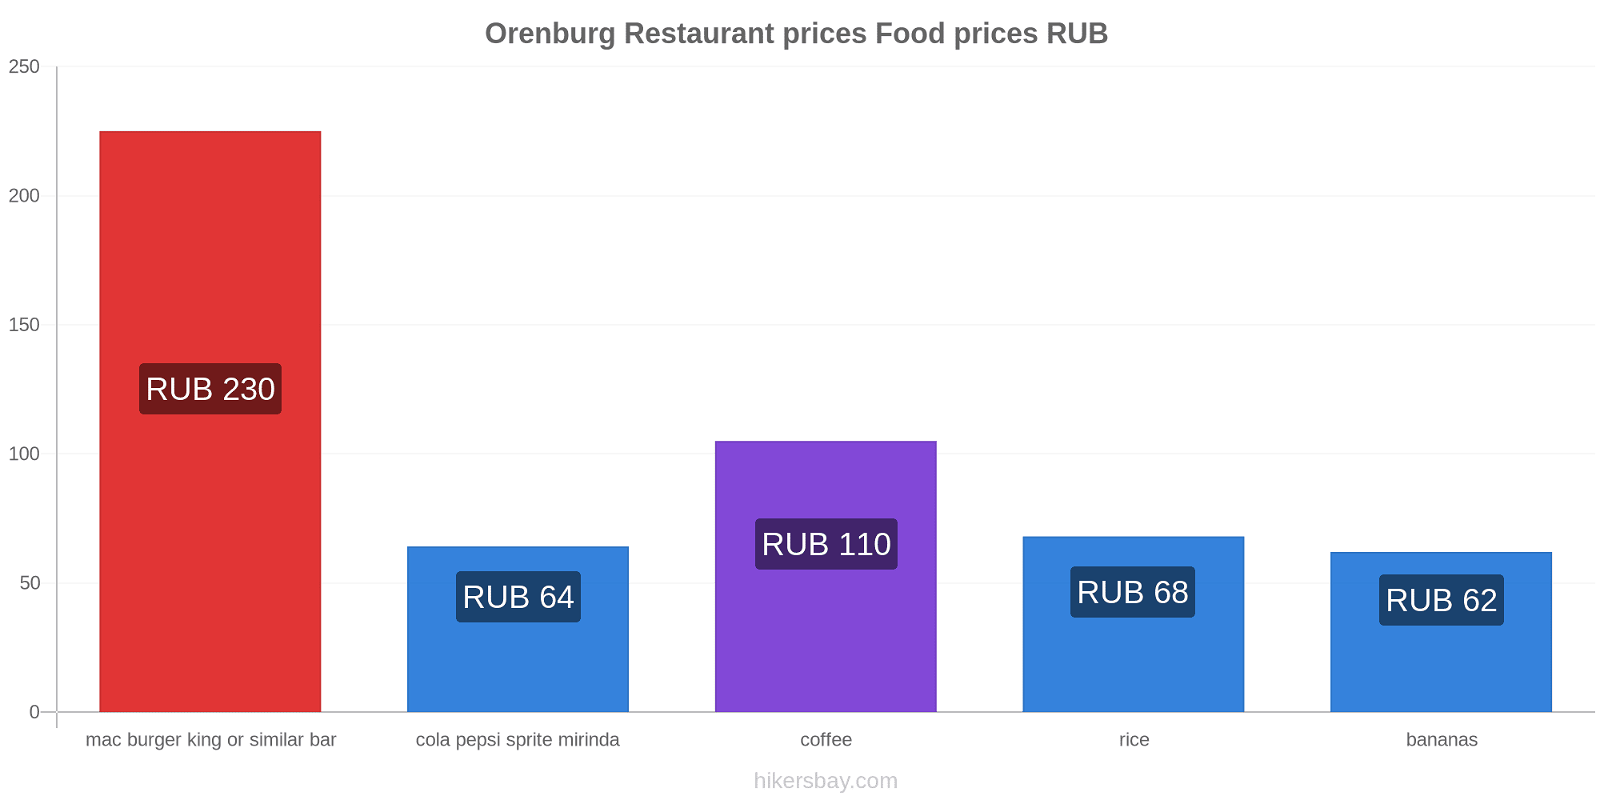 Orenburg price changes hikersbay.com